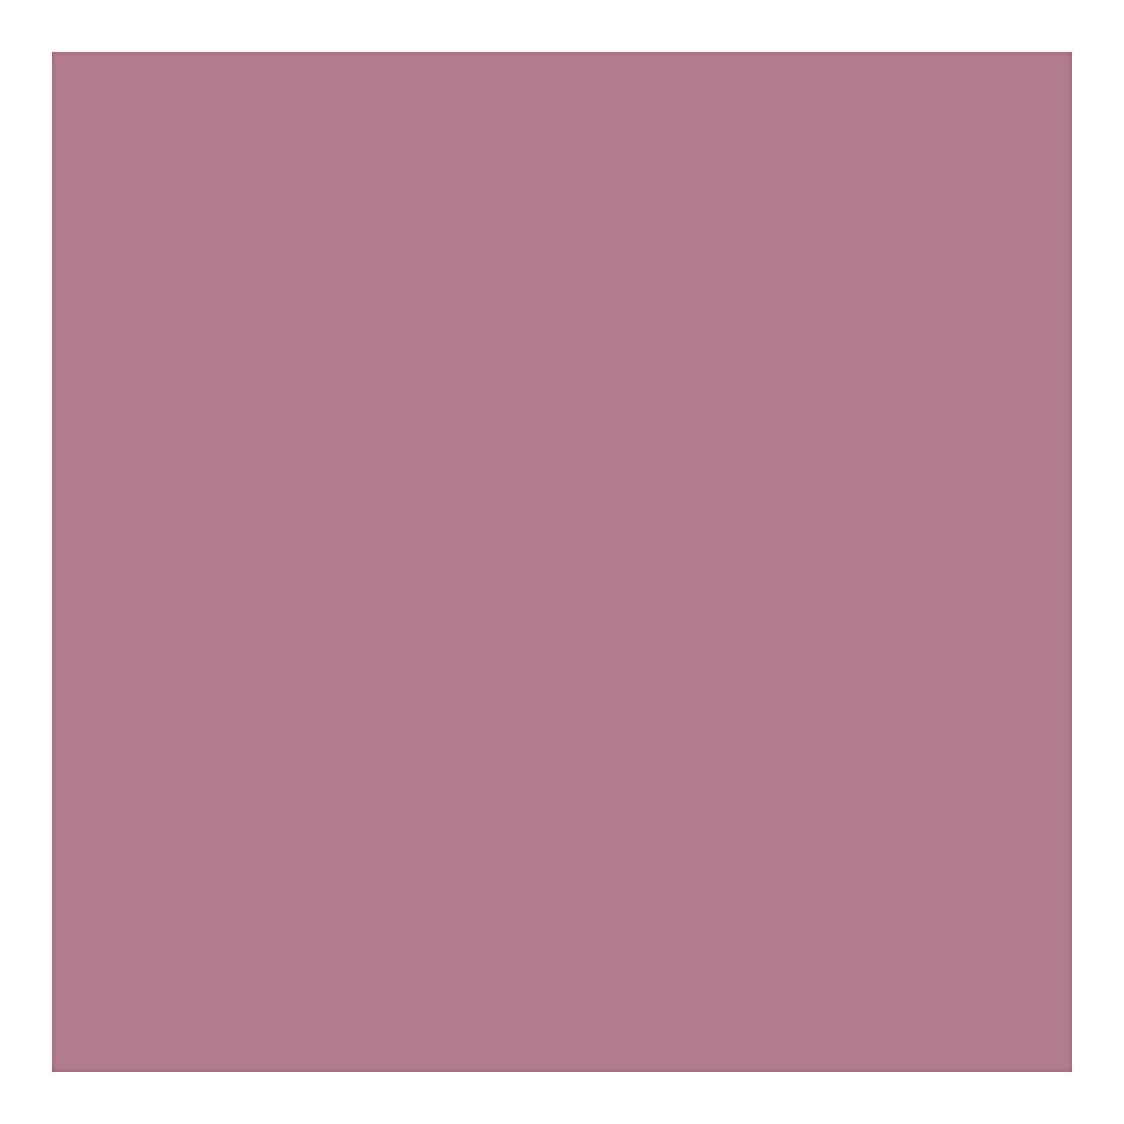 Textilfarbe Halbdeckende Textilfarbe – Dunkelrosa, 50 ml